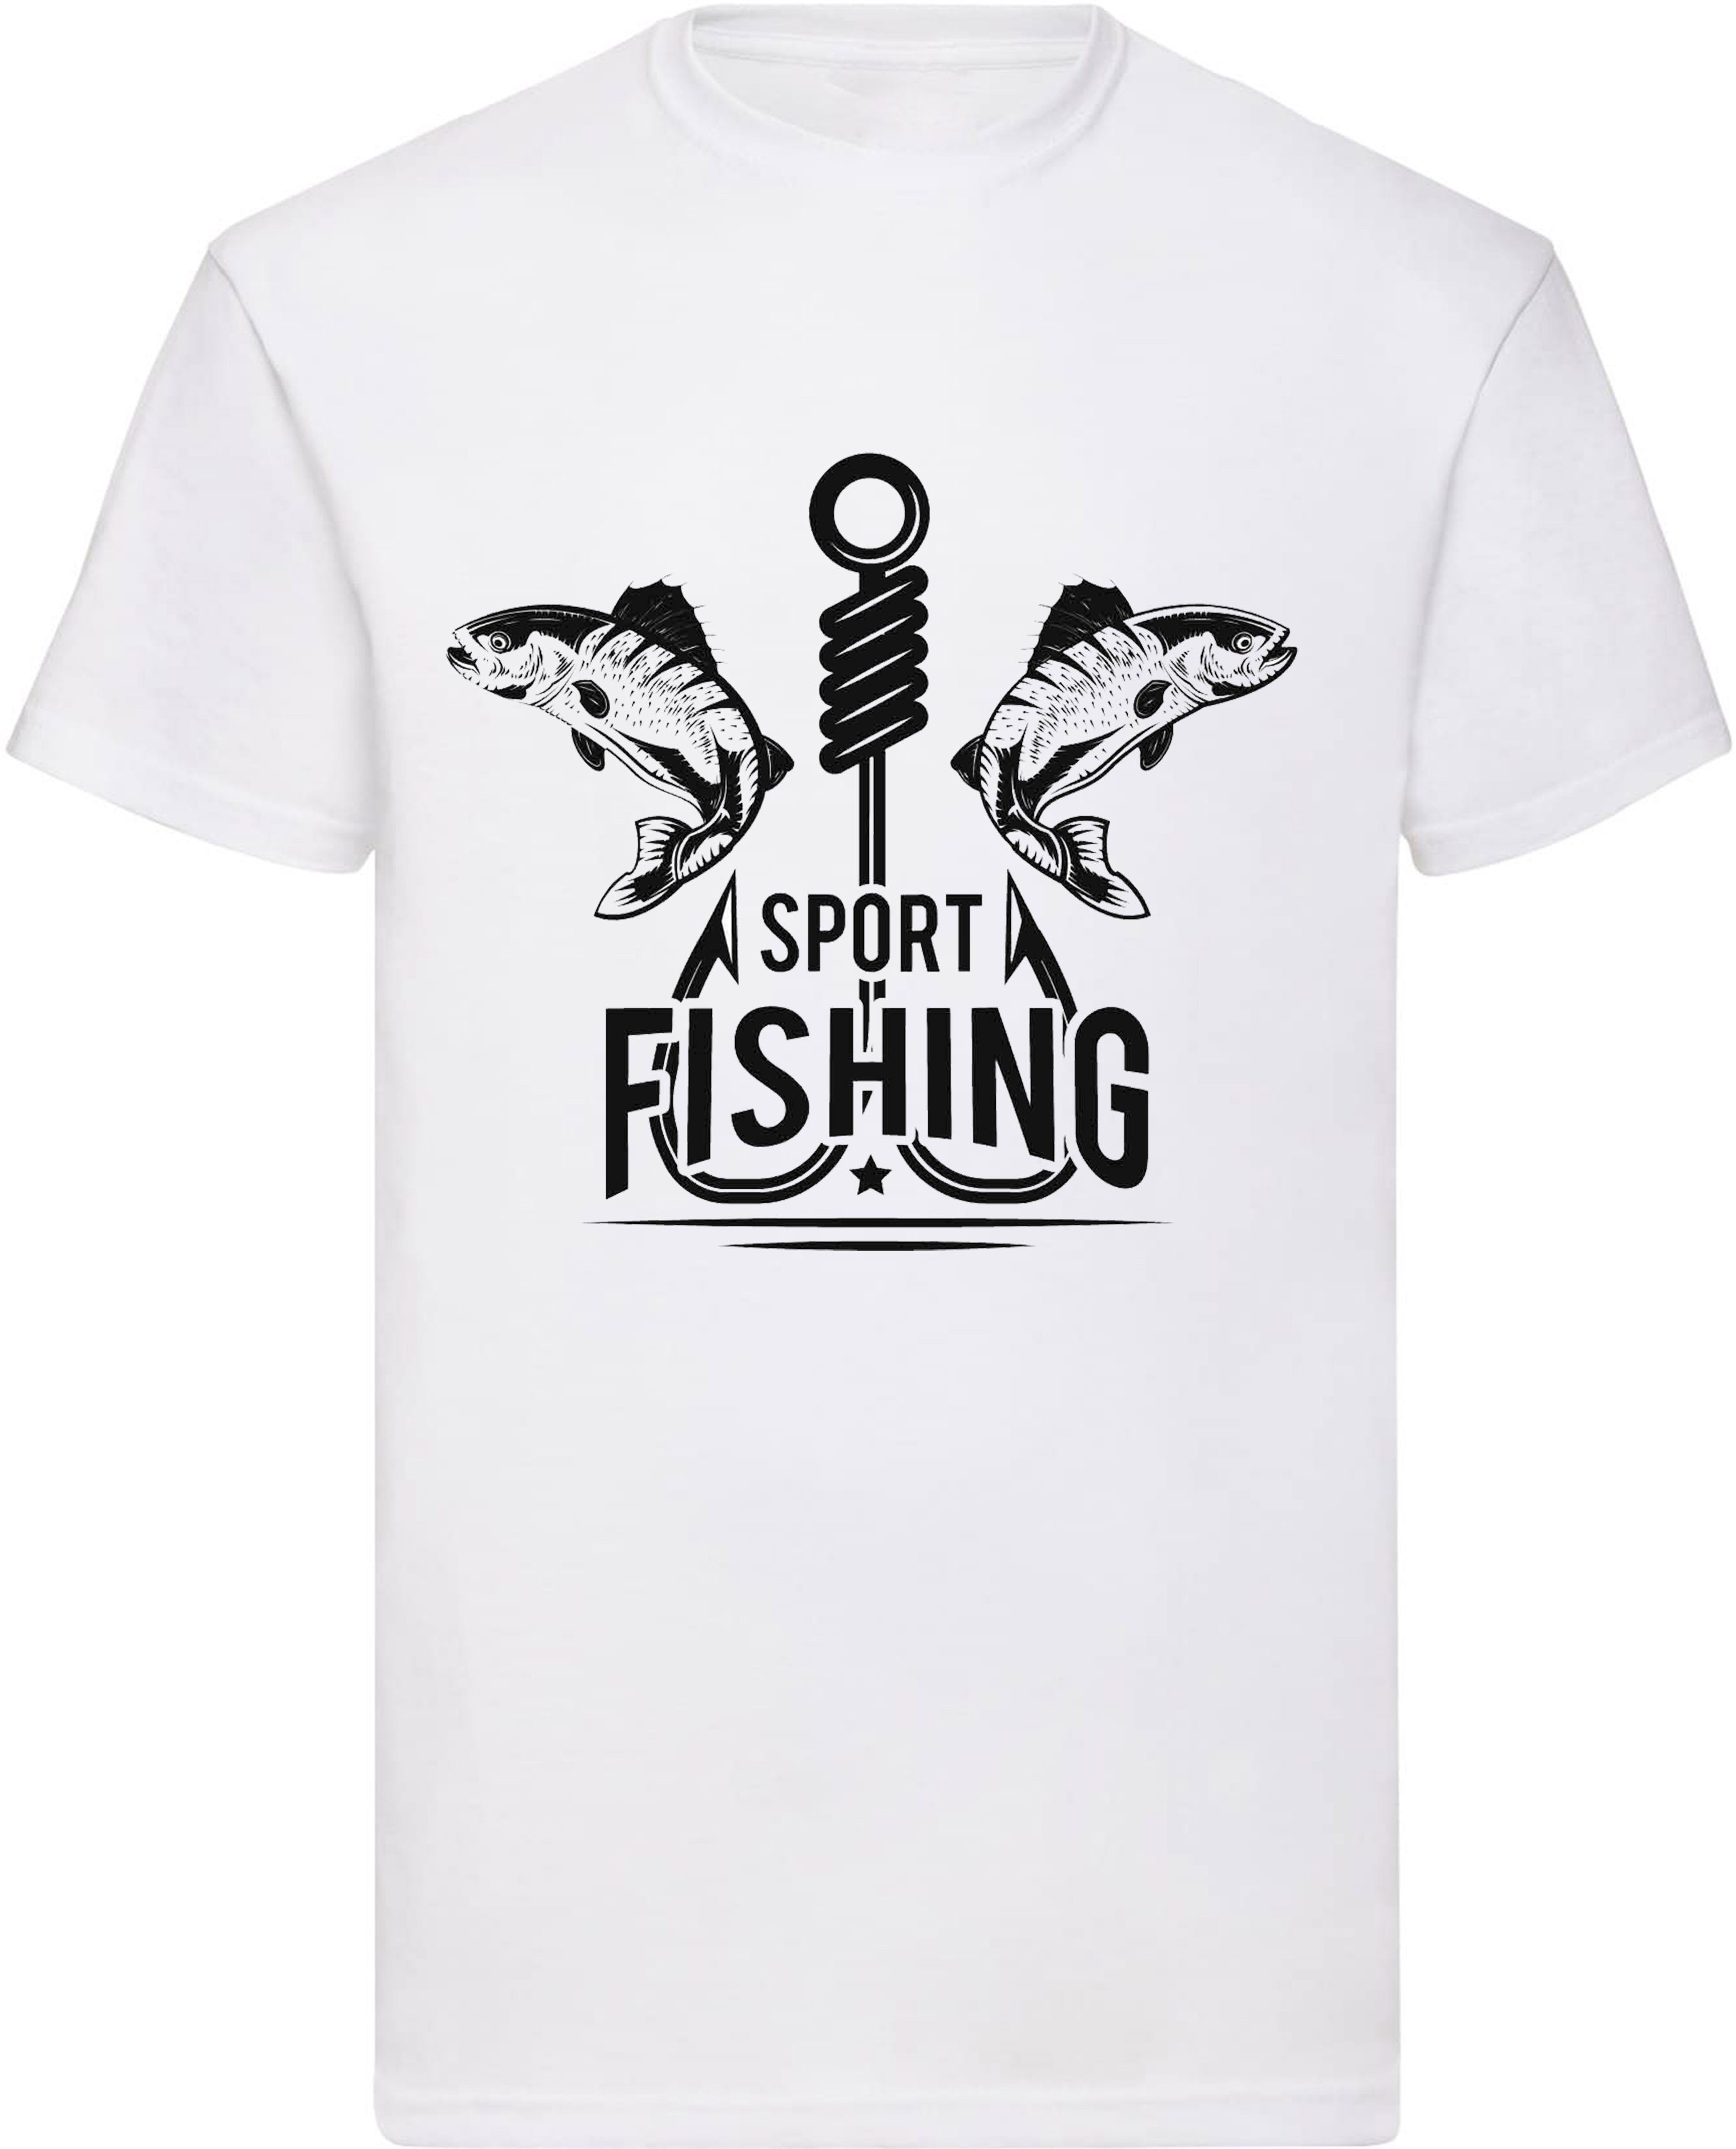 Banco T-Shirt Sport Fishing Angeln Sport Baumwolle Freizeit Sommer Outfit 100